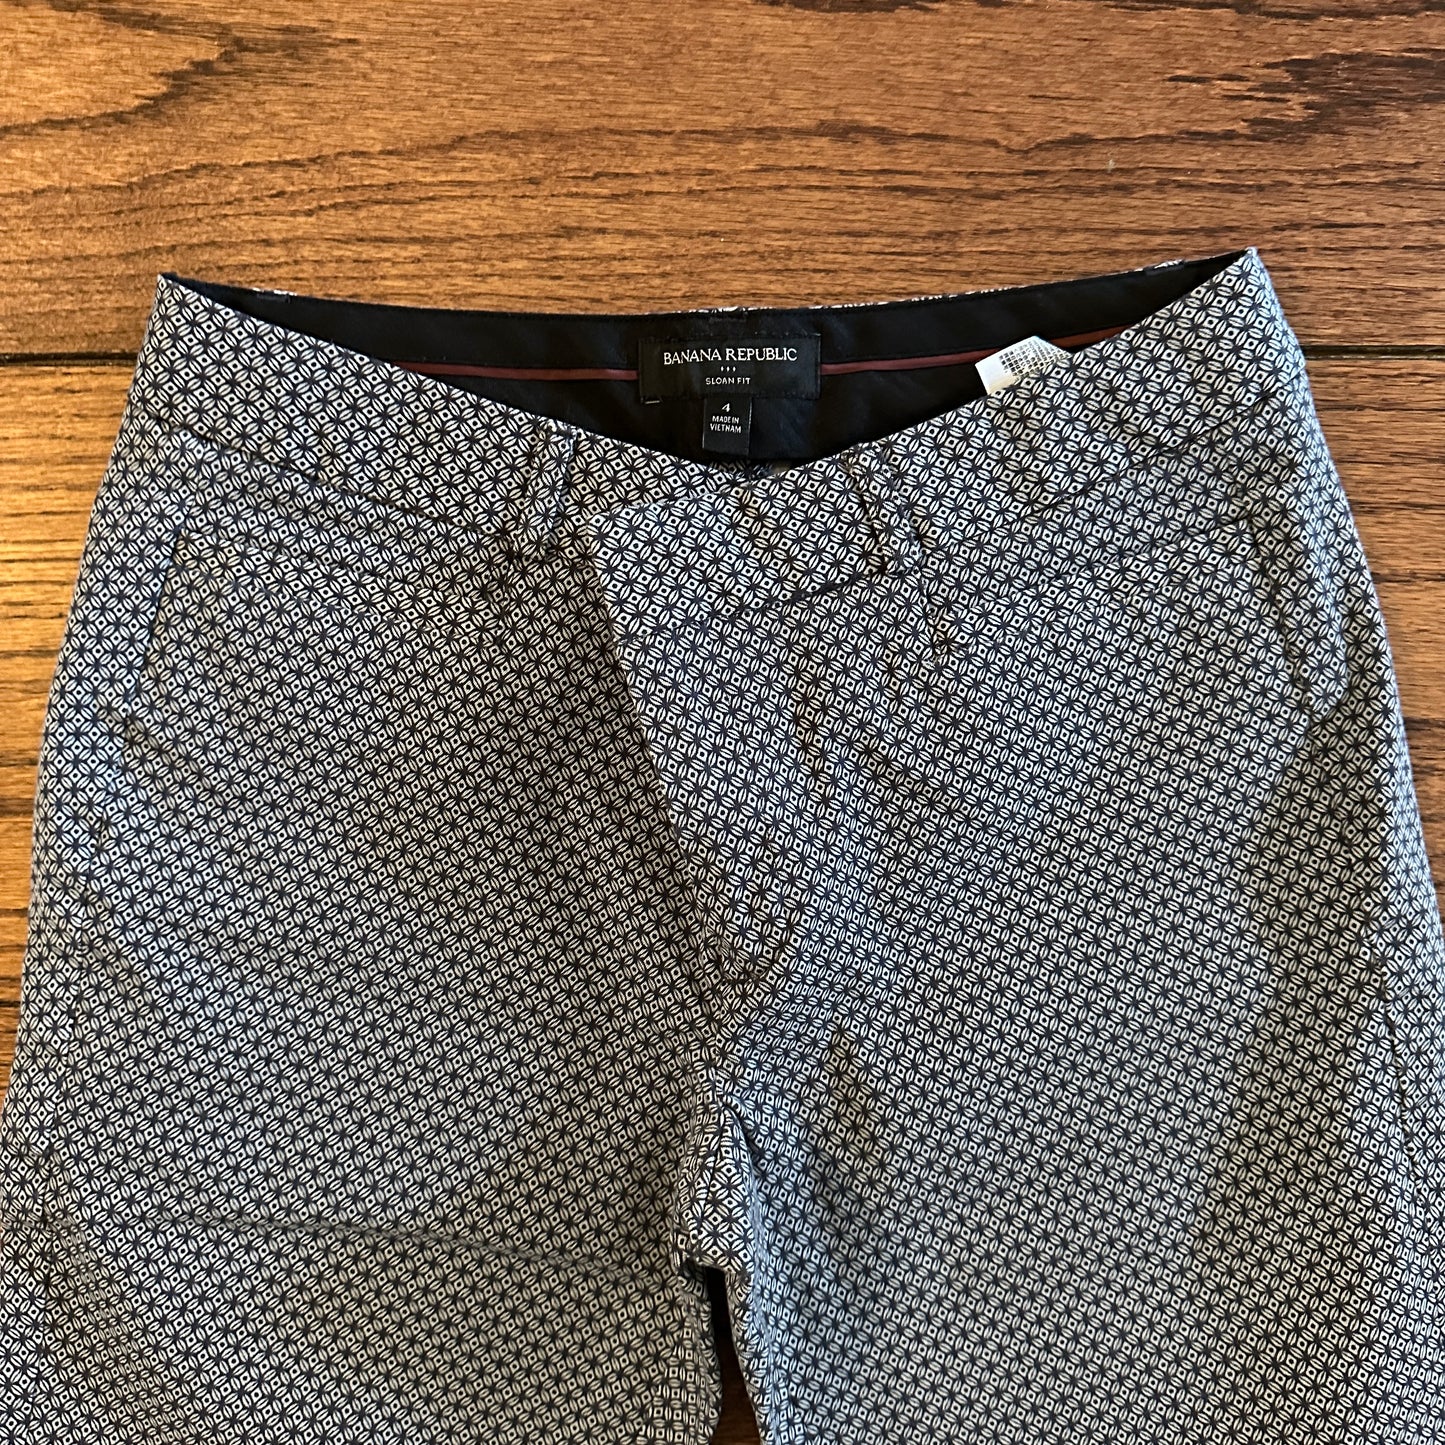 Women's Banana Republic Cropped Pants, Sloan Fit, Navy and Gray Pattern - size 4